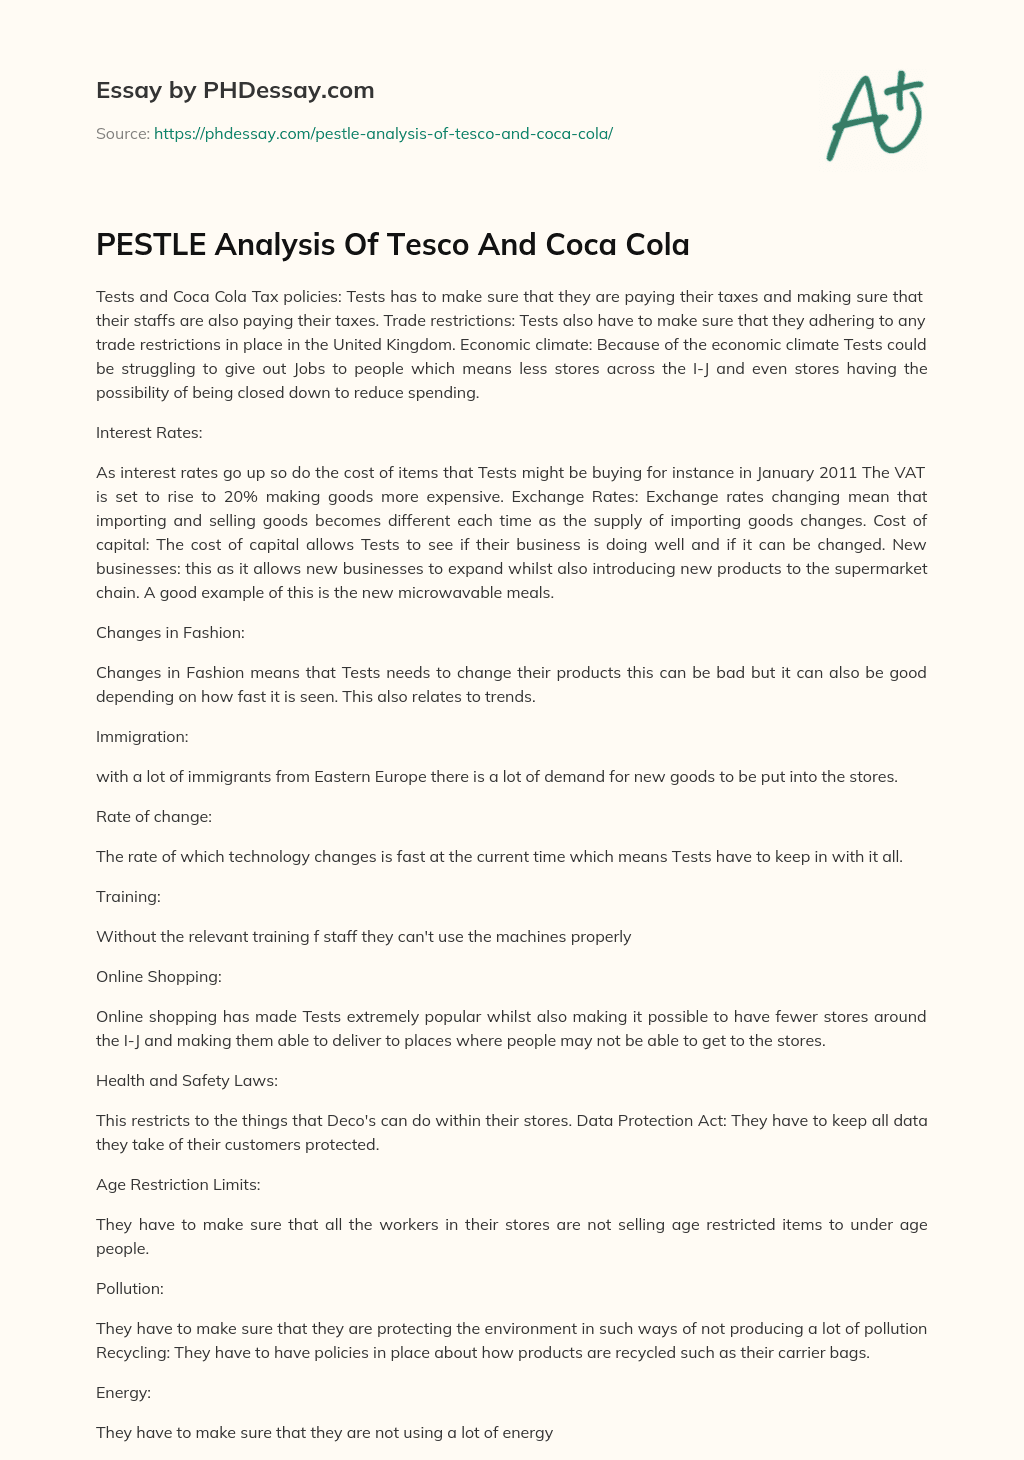 PESTLE Analysis Of Tesco And Coca Cola essay